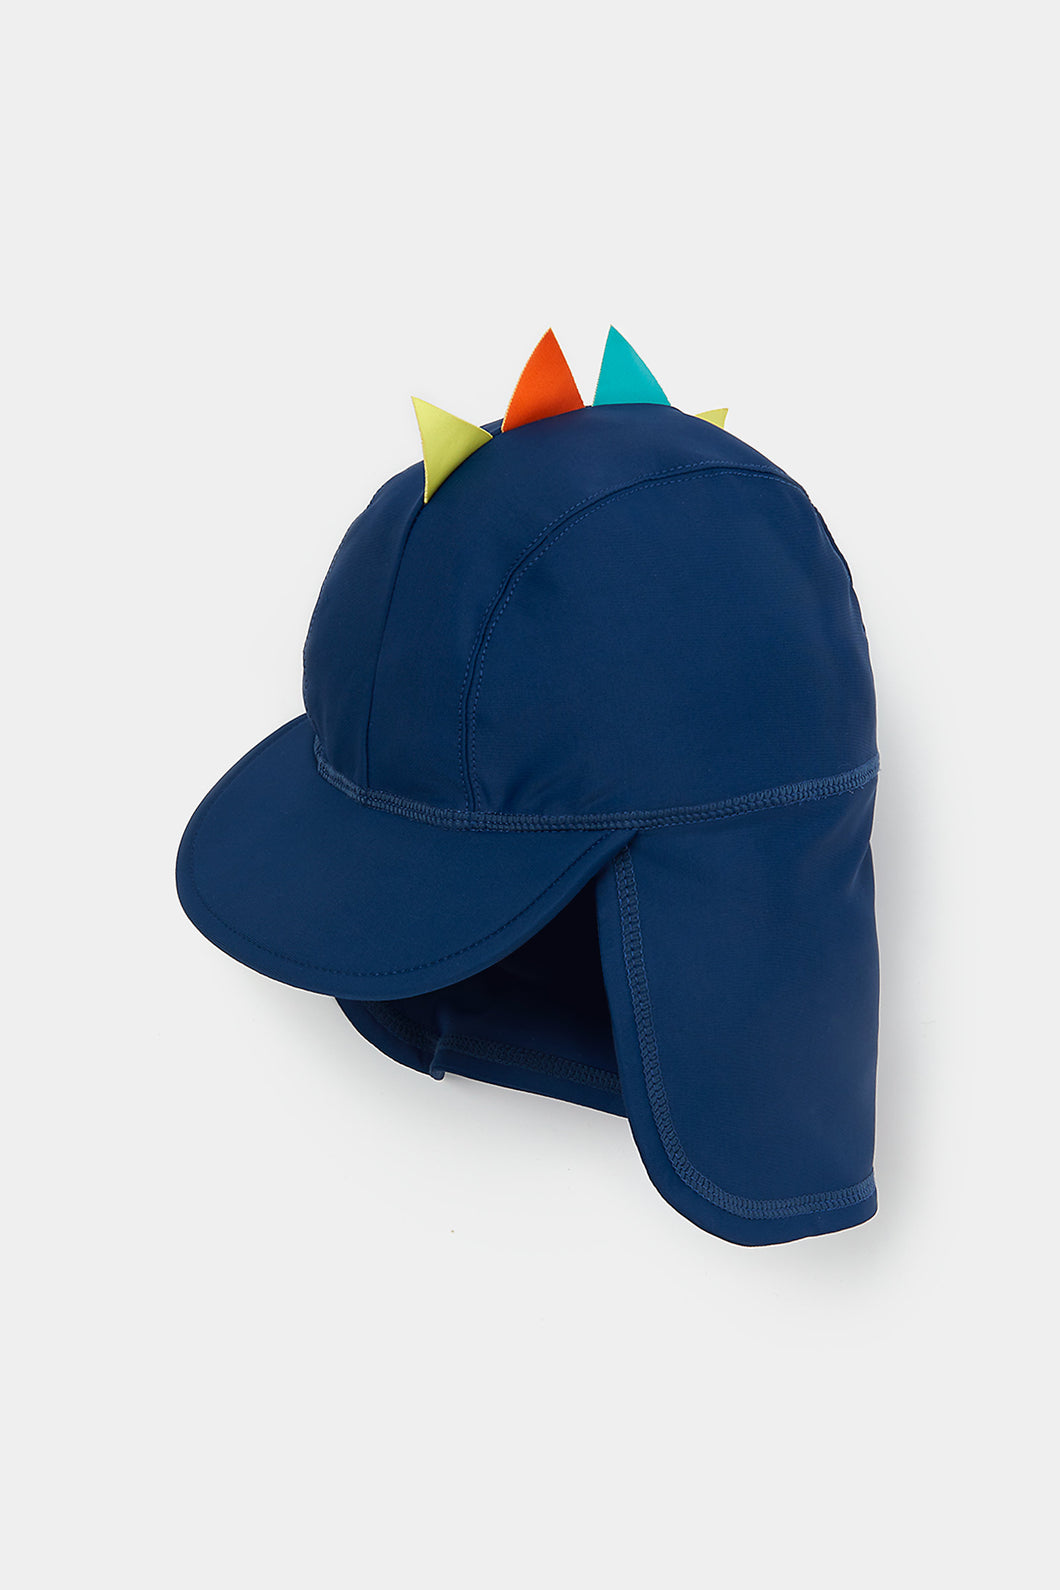 Mothercare Dino Spike Sunsafe Keppi Hat